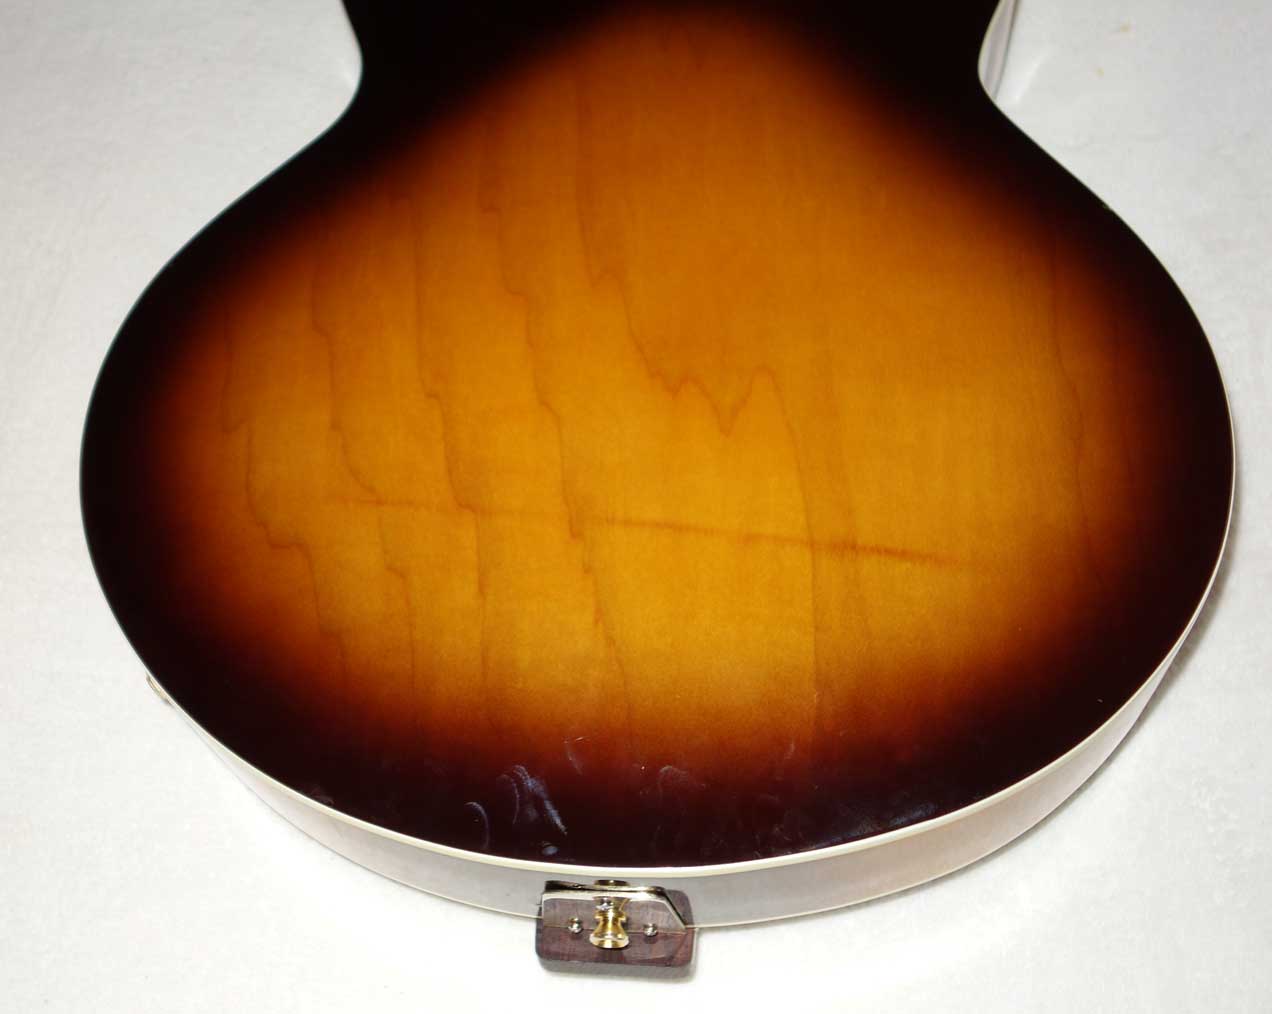 2003 Carlo Robelli D120 Manhattan (Peerless Monarch) Sunburst Archtop Guitar w/Schaller PUPs!!